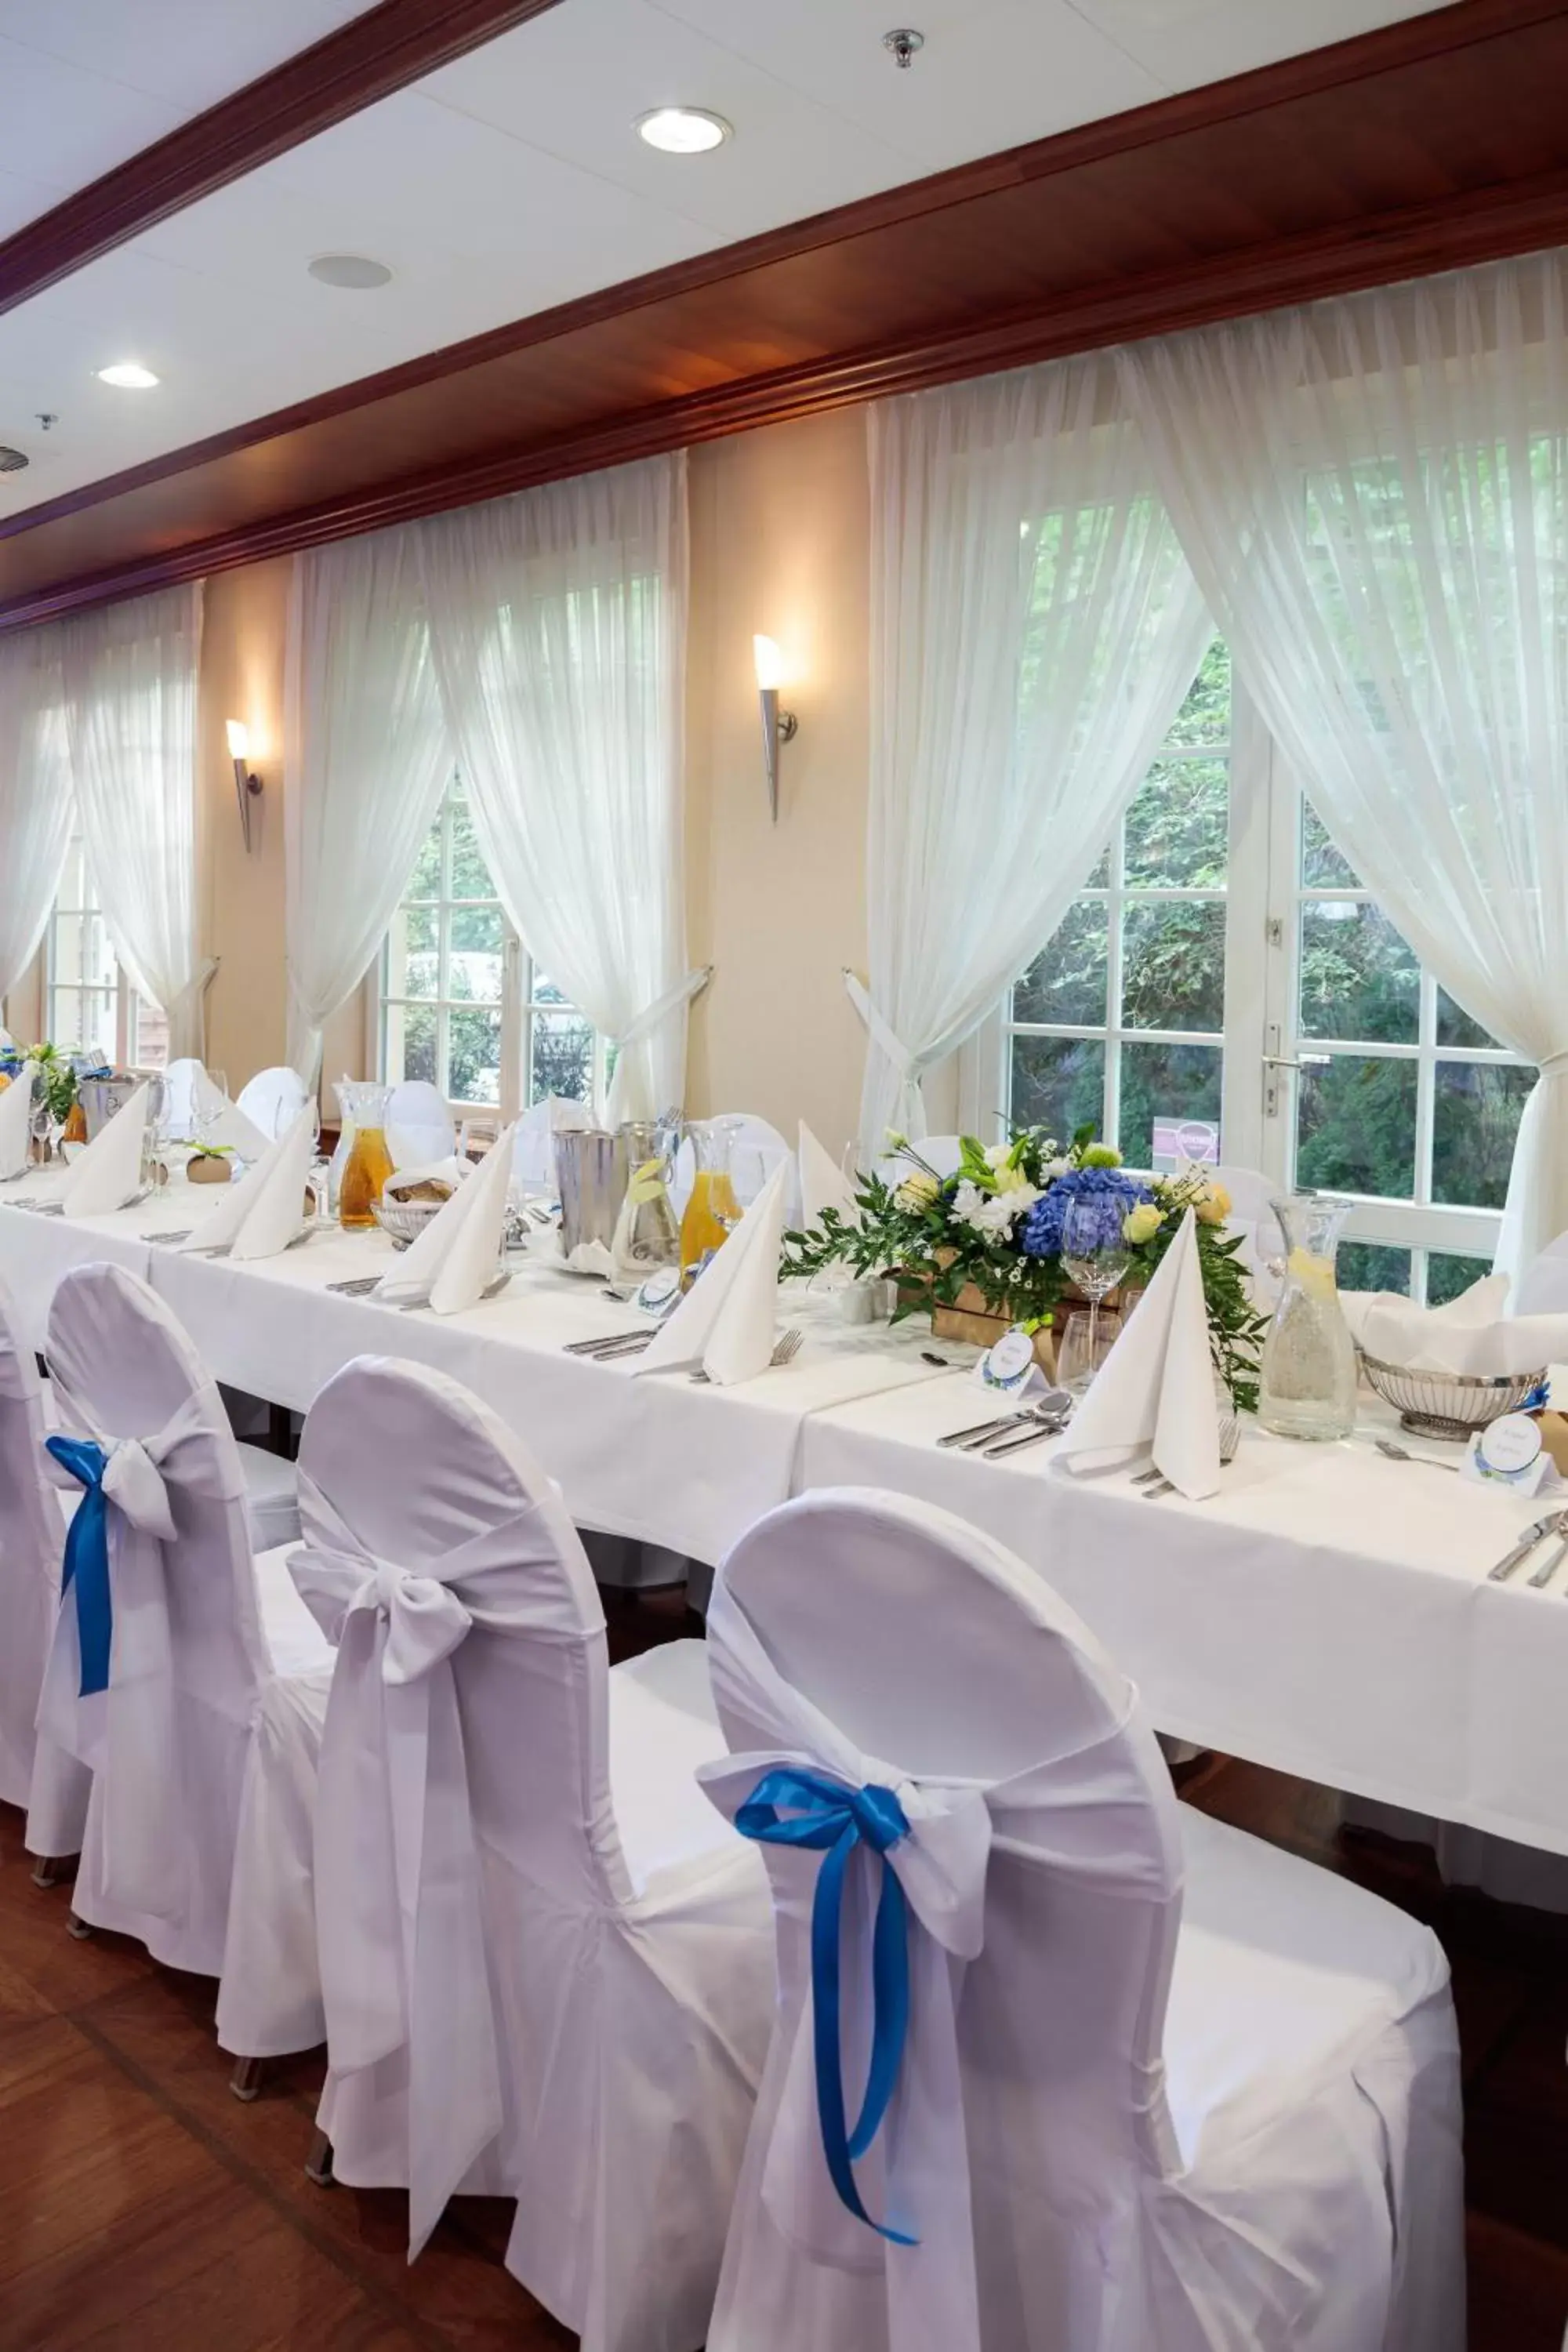 Banquet/Function facilities, Banquet Facilities in Park Hotel